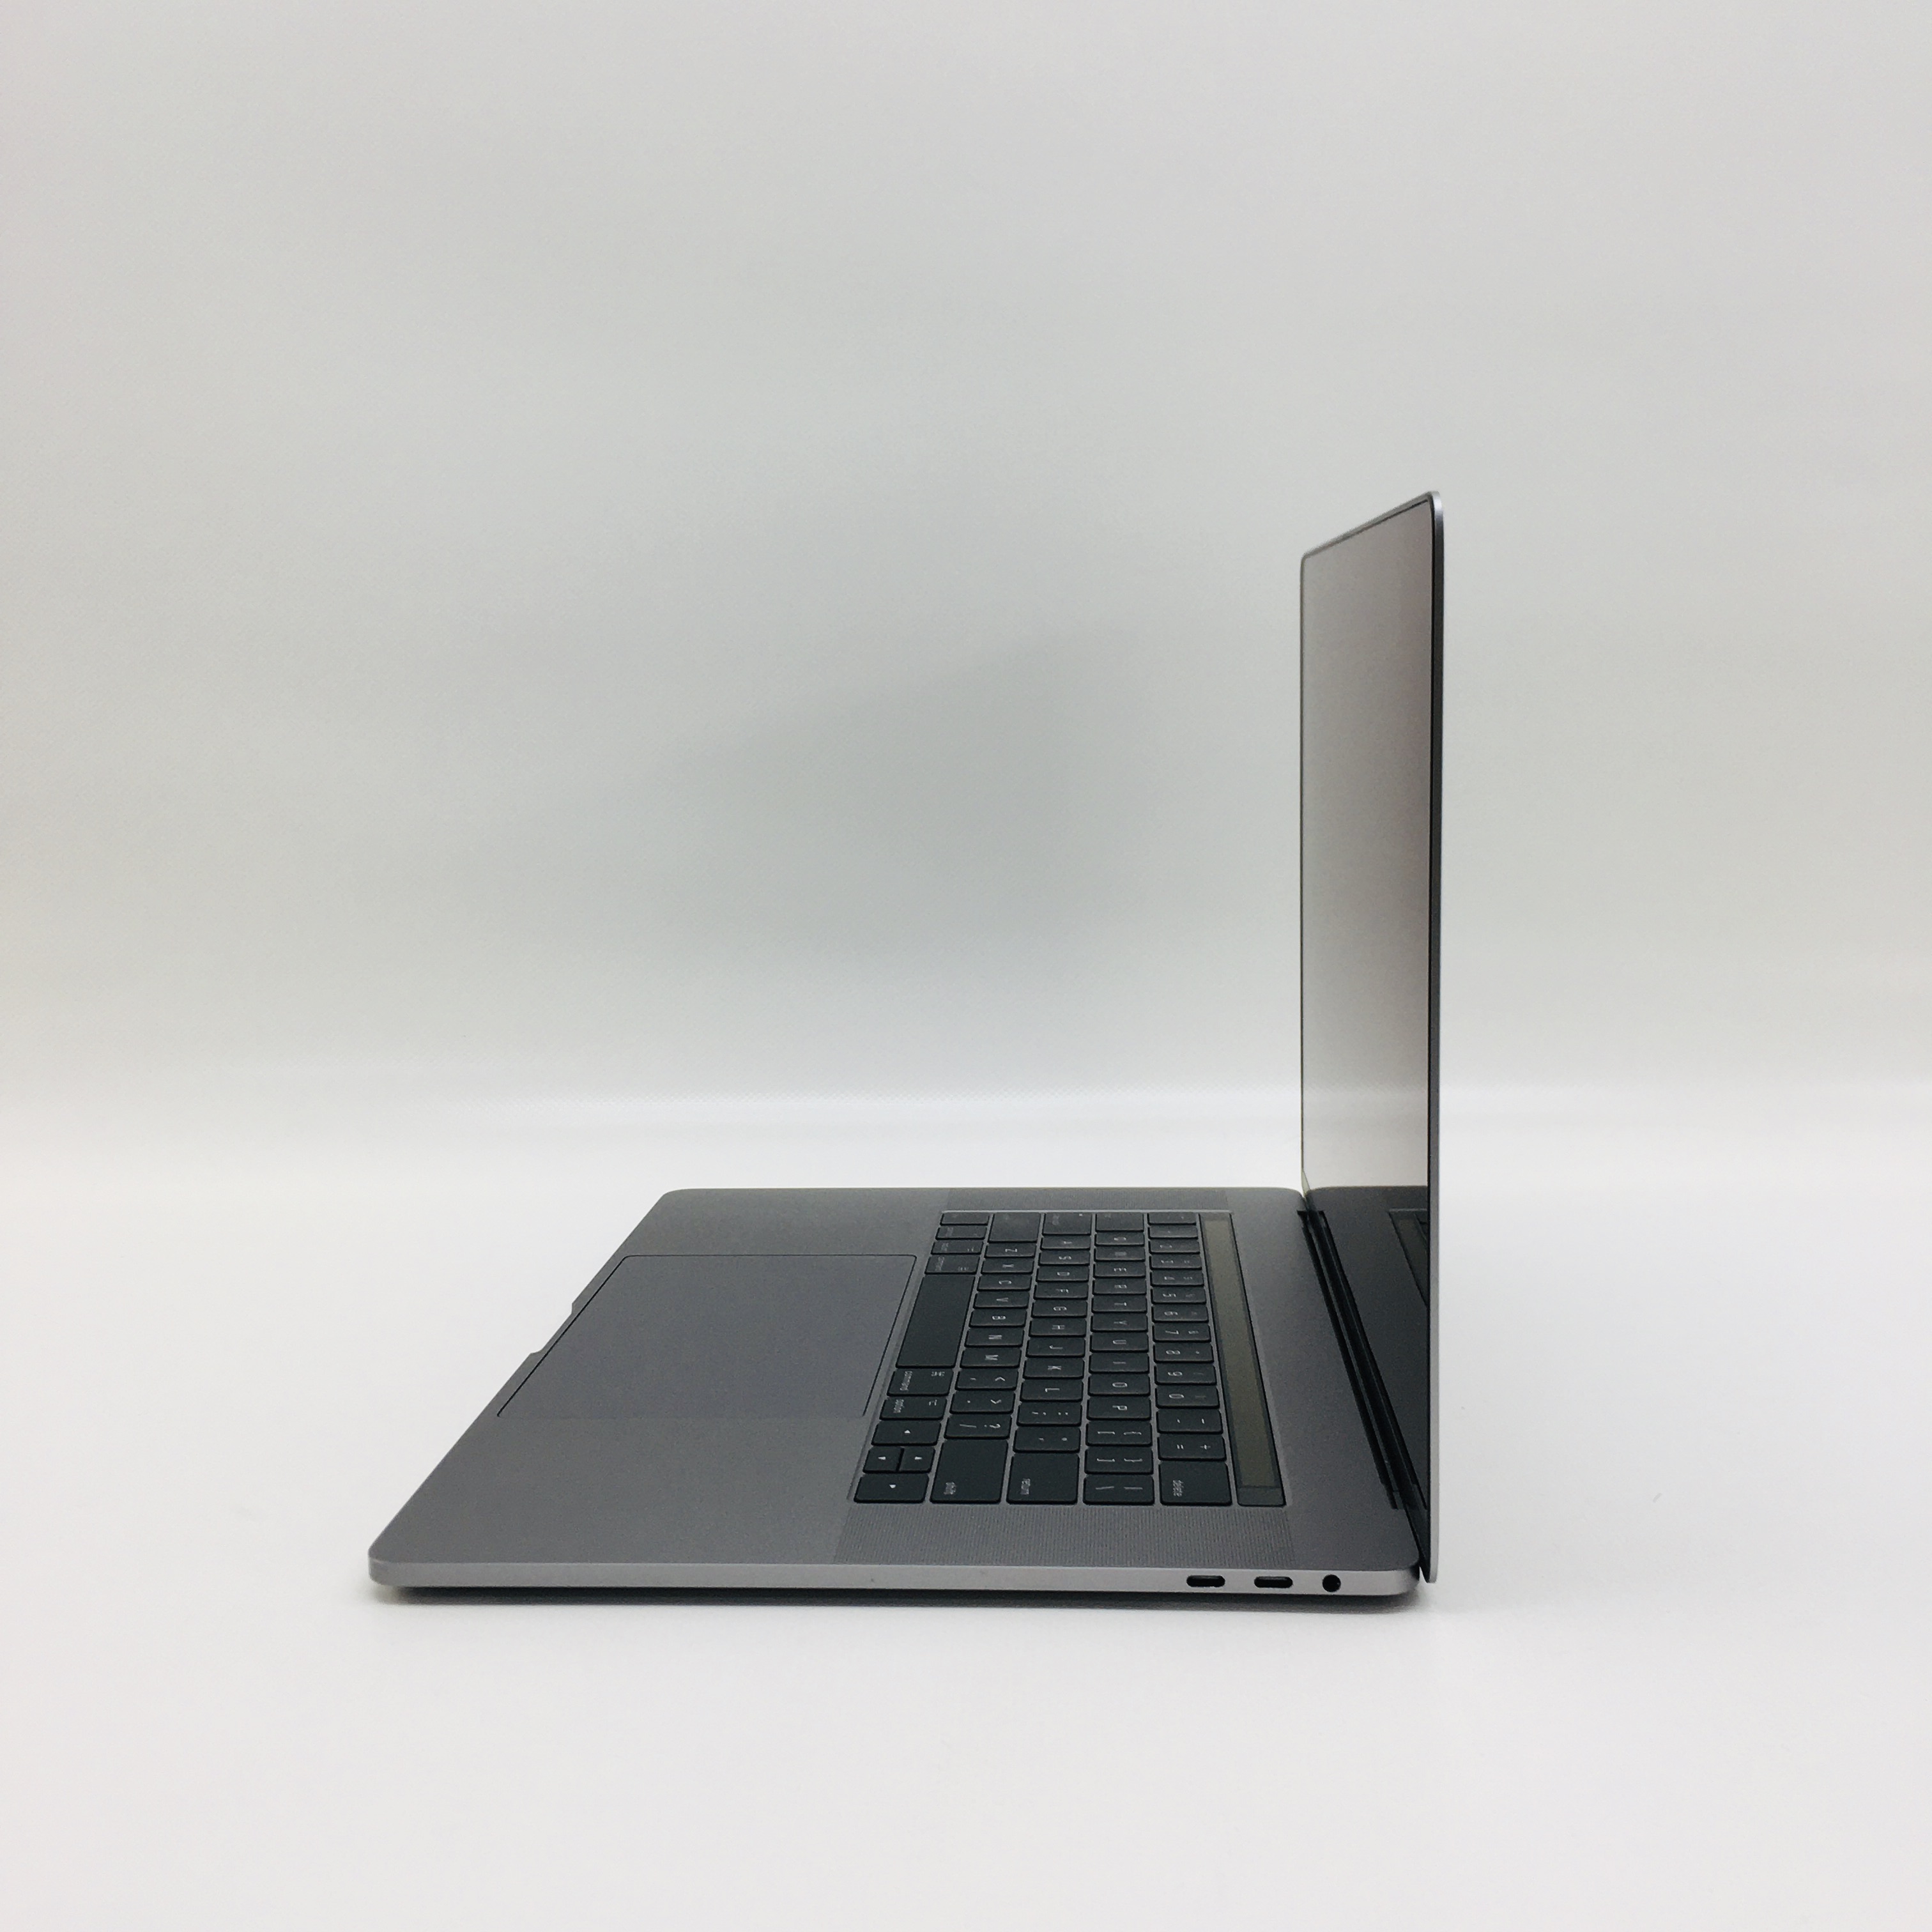 MacBook Pro 15" Touch Bar Mid 2017 (Intel Quad-Core i7 3.1 GHz 16 GB RAM 1 TB SSD), Space Gray, Intel Quad-Core i7 3.1 GHz, 16 GB RAM, 1 TB SSD, image 3